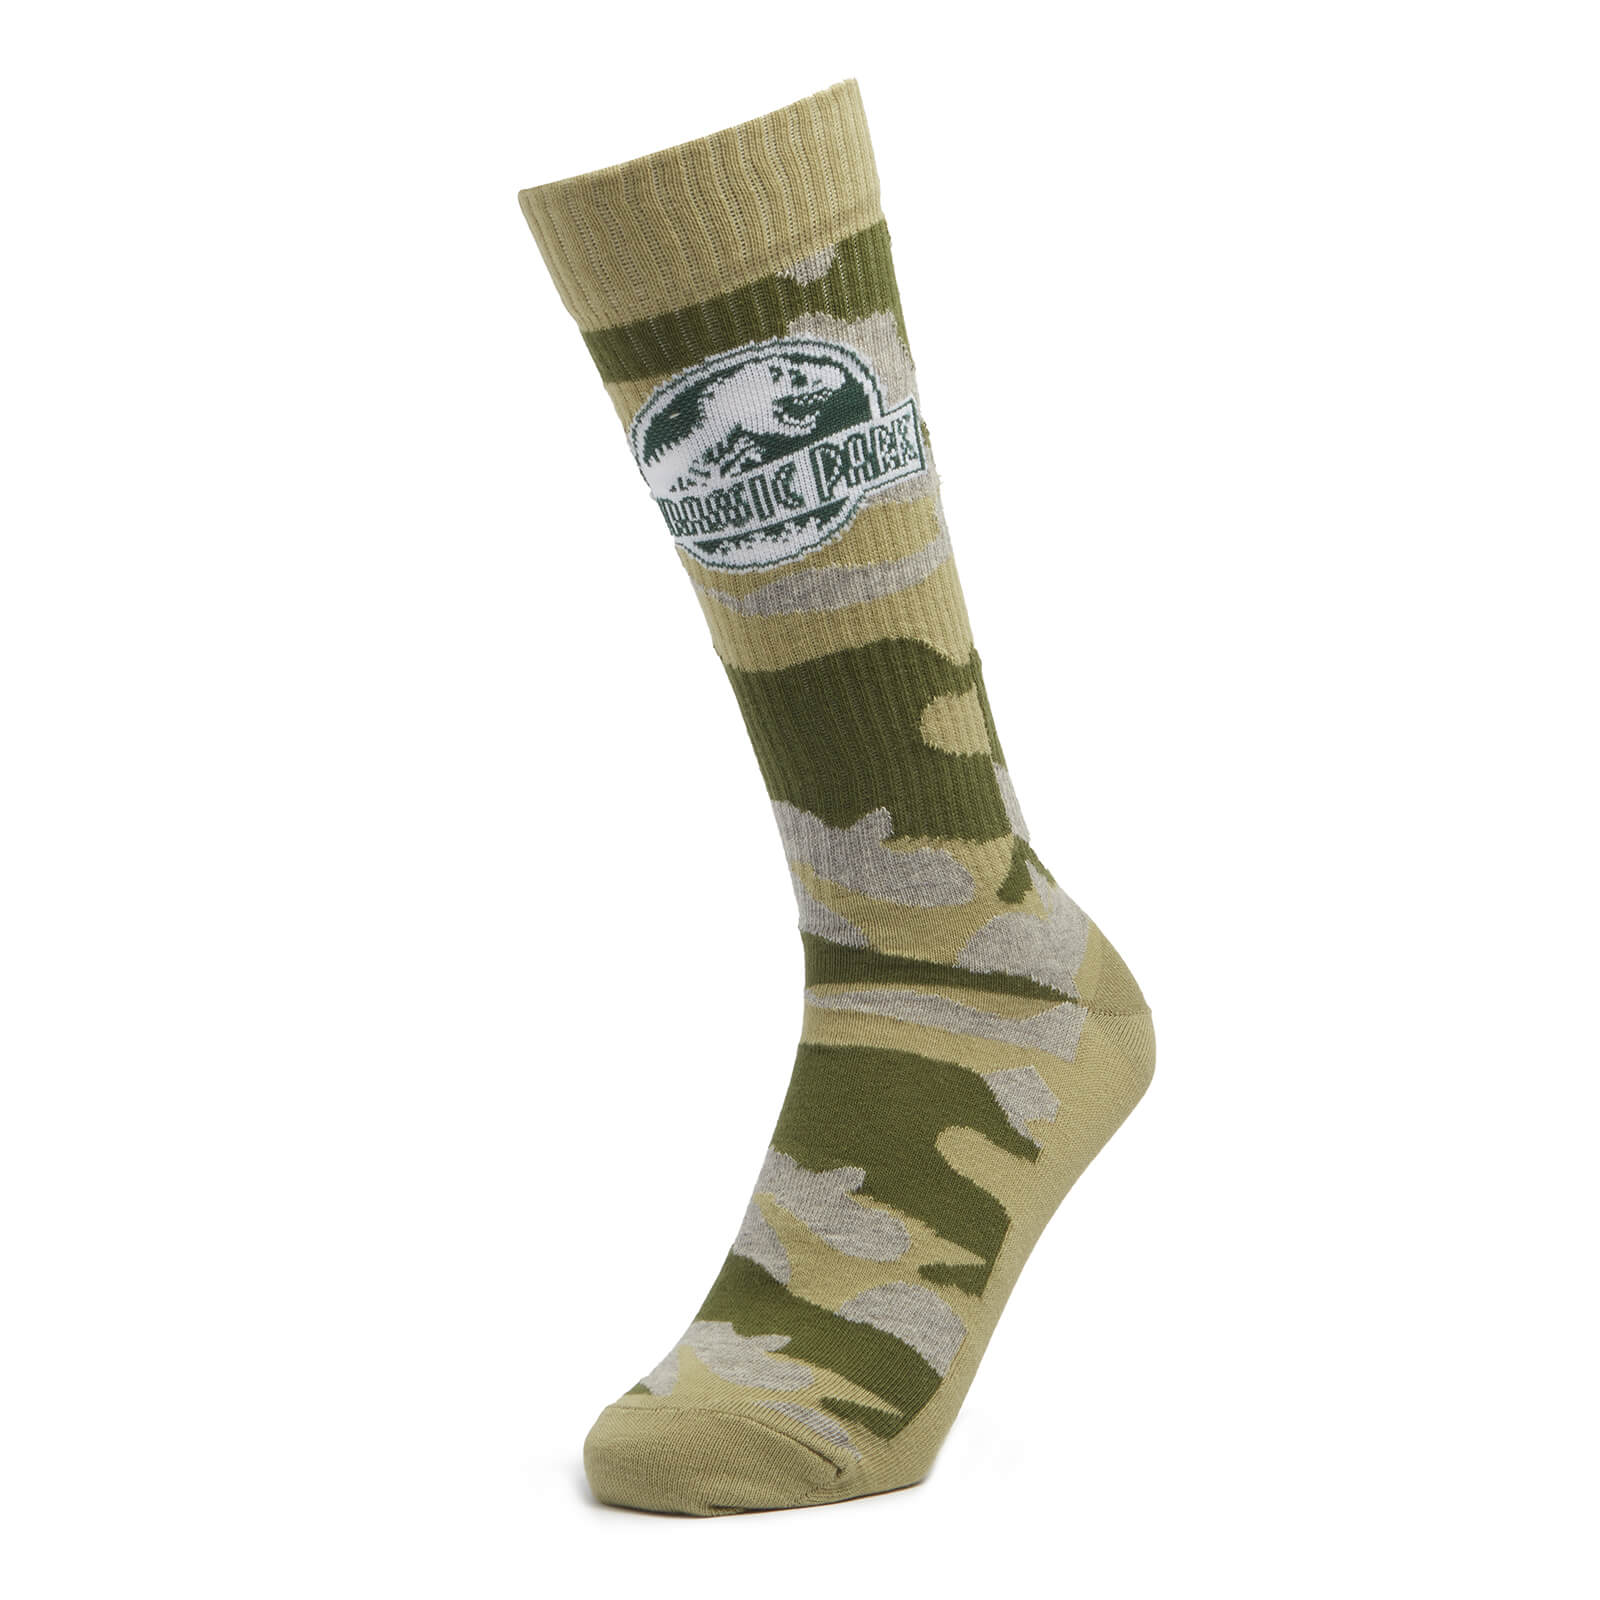 Men's Jurassic Park Camo Sports Socks - Khaki - UK 4-7.5